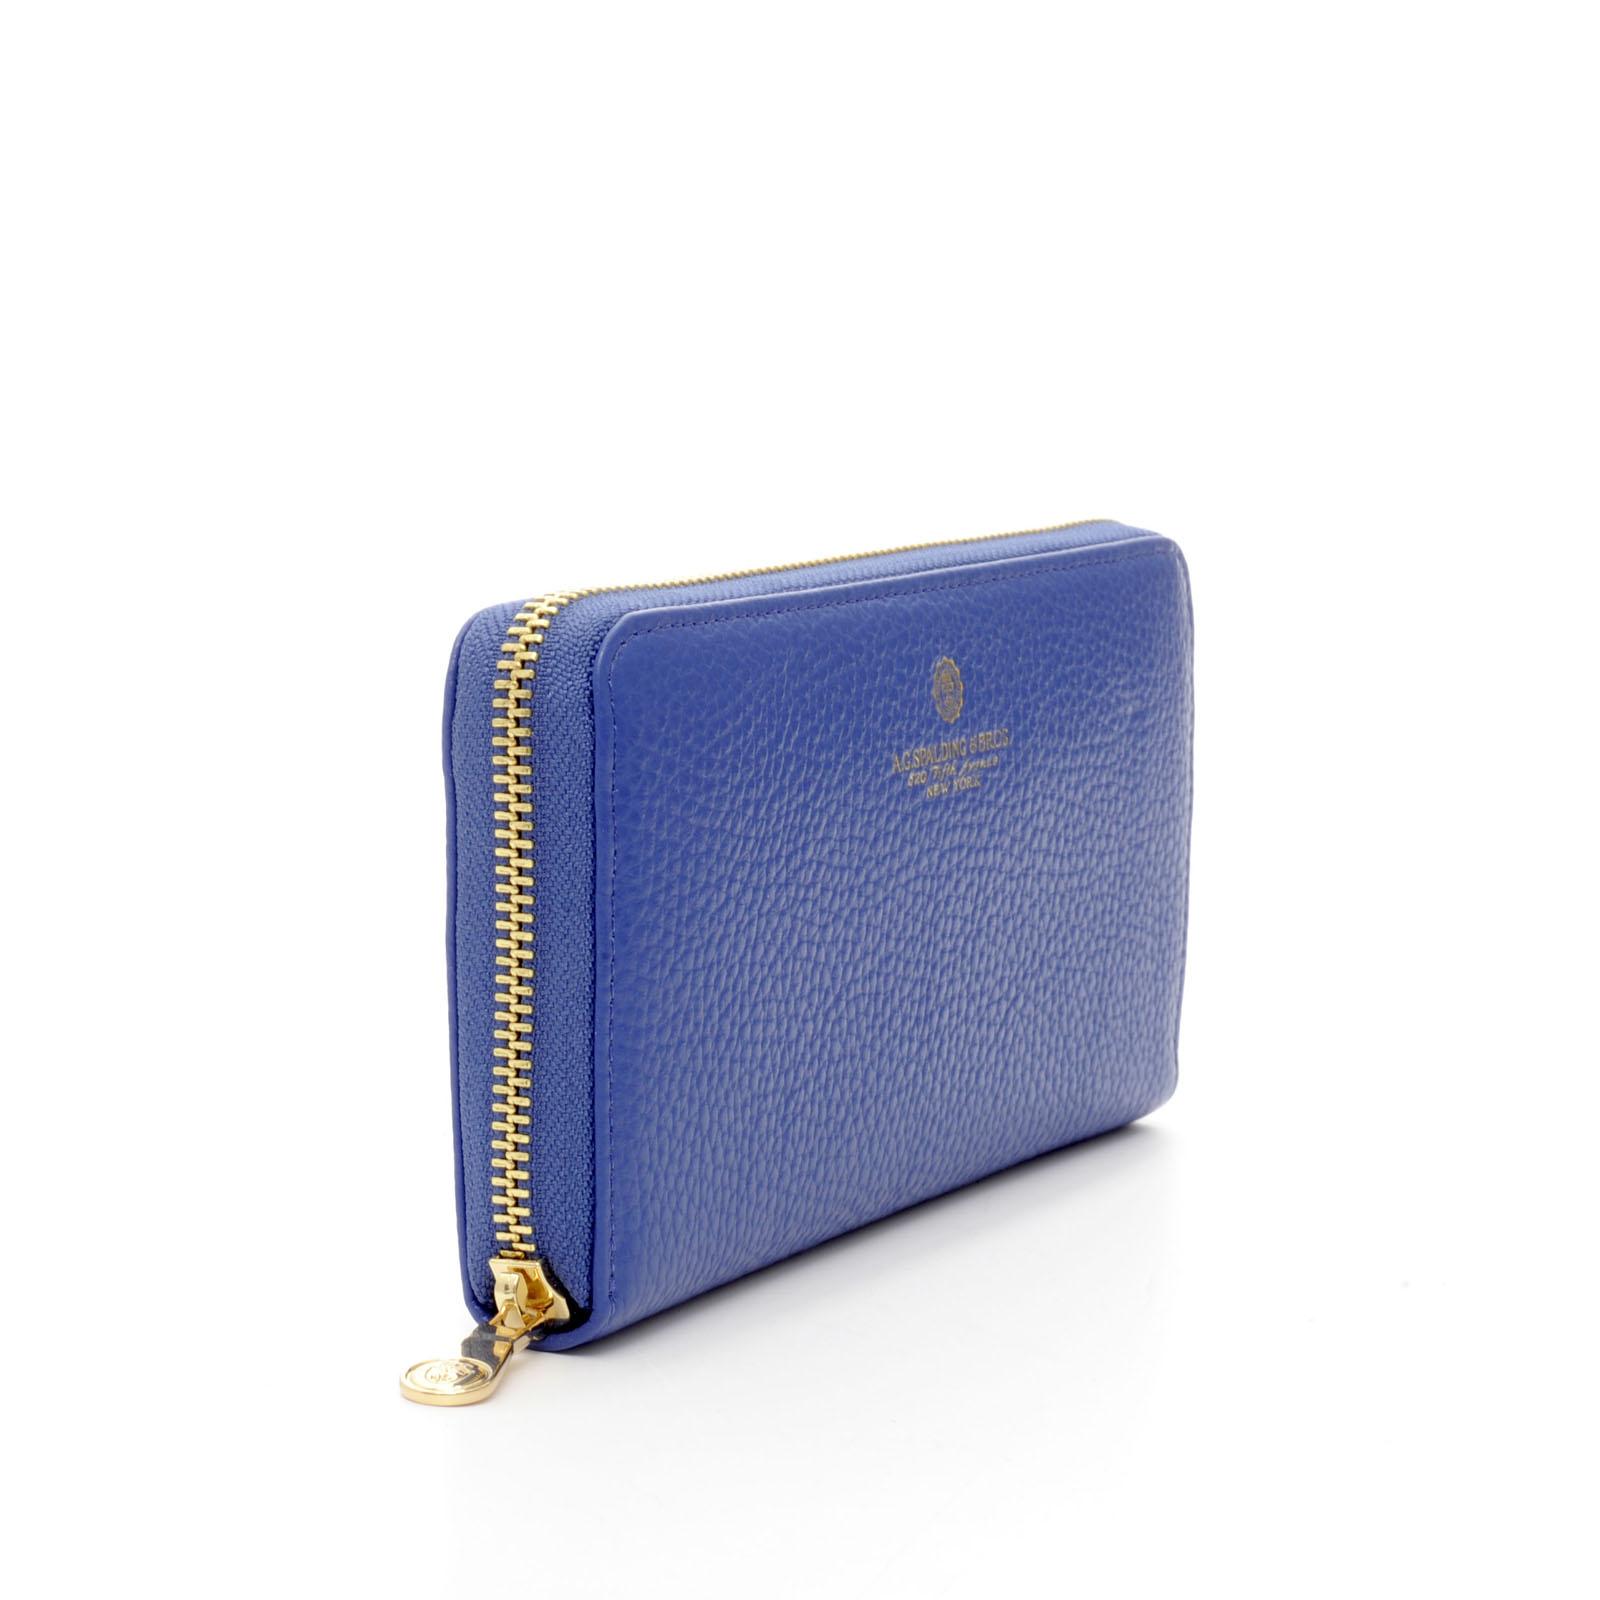 Woman Zipped Wallet Tiffany BLUE ROYAL A.G.Spalding&Bros